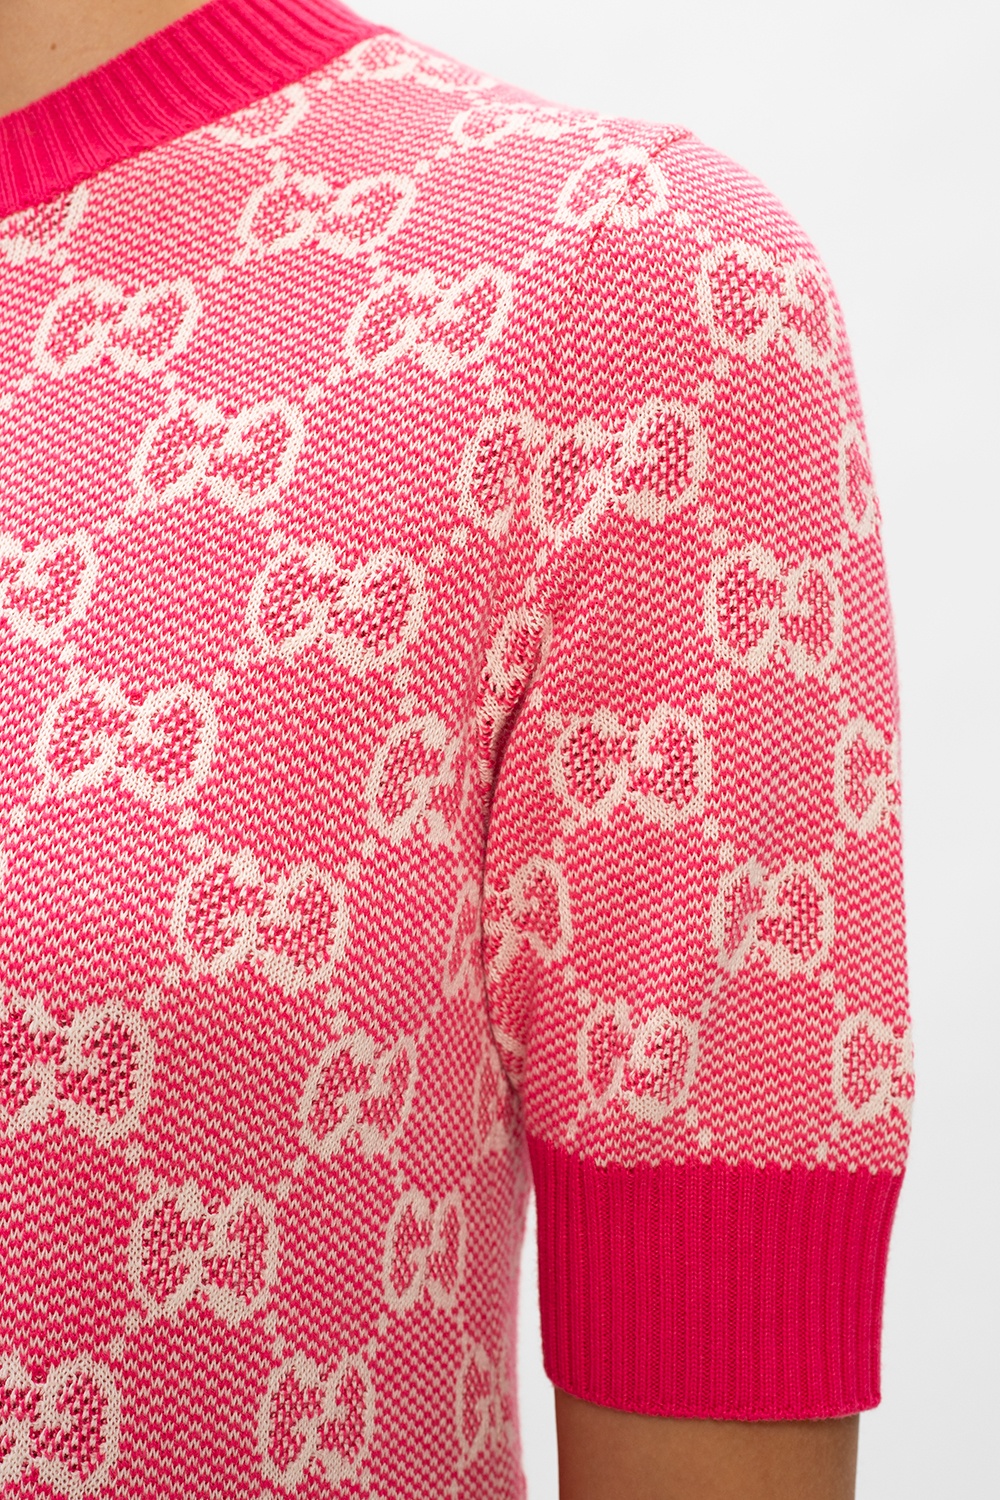 Pink Dress with logo Gucci - Vitkac Canada